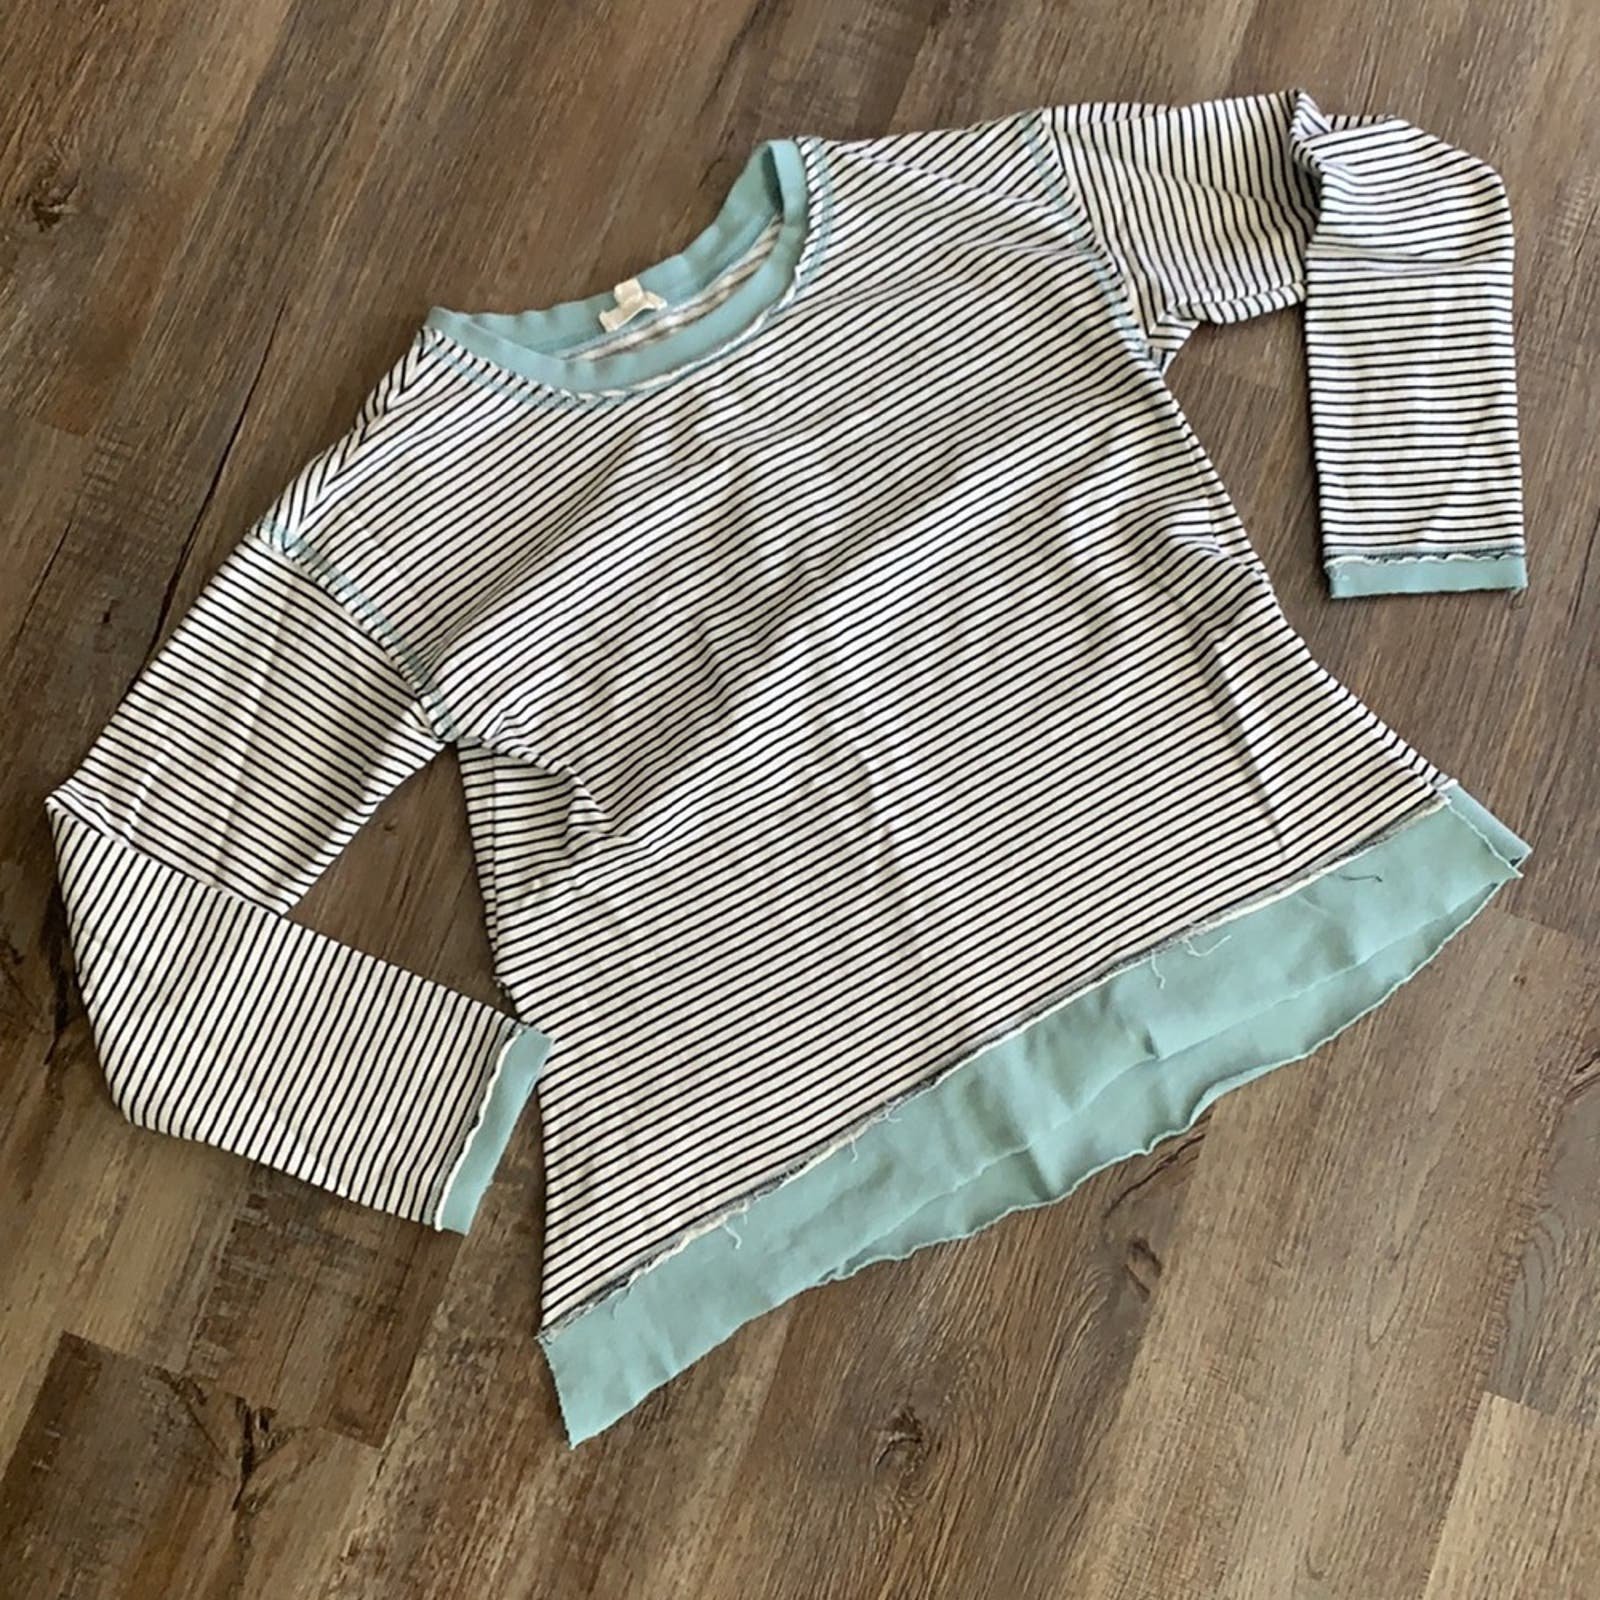 high discount Hem & Thread Striped Pullover Knit Sweatshirt Sz S gLsmI1mg6 on sale